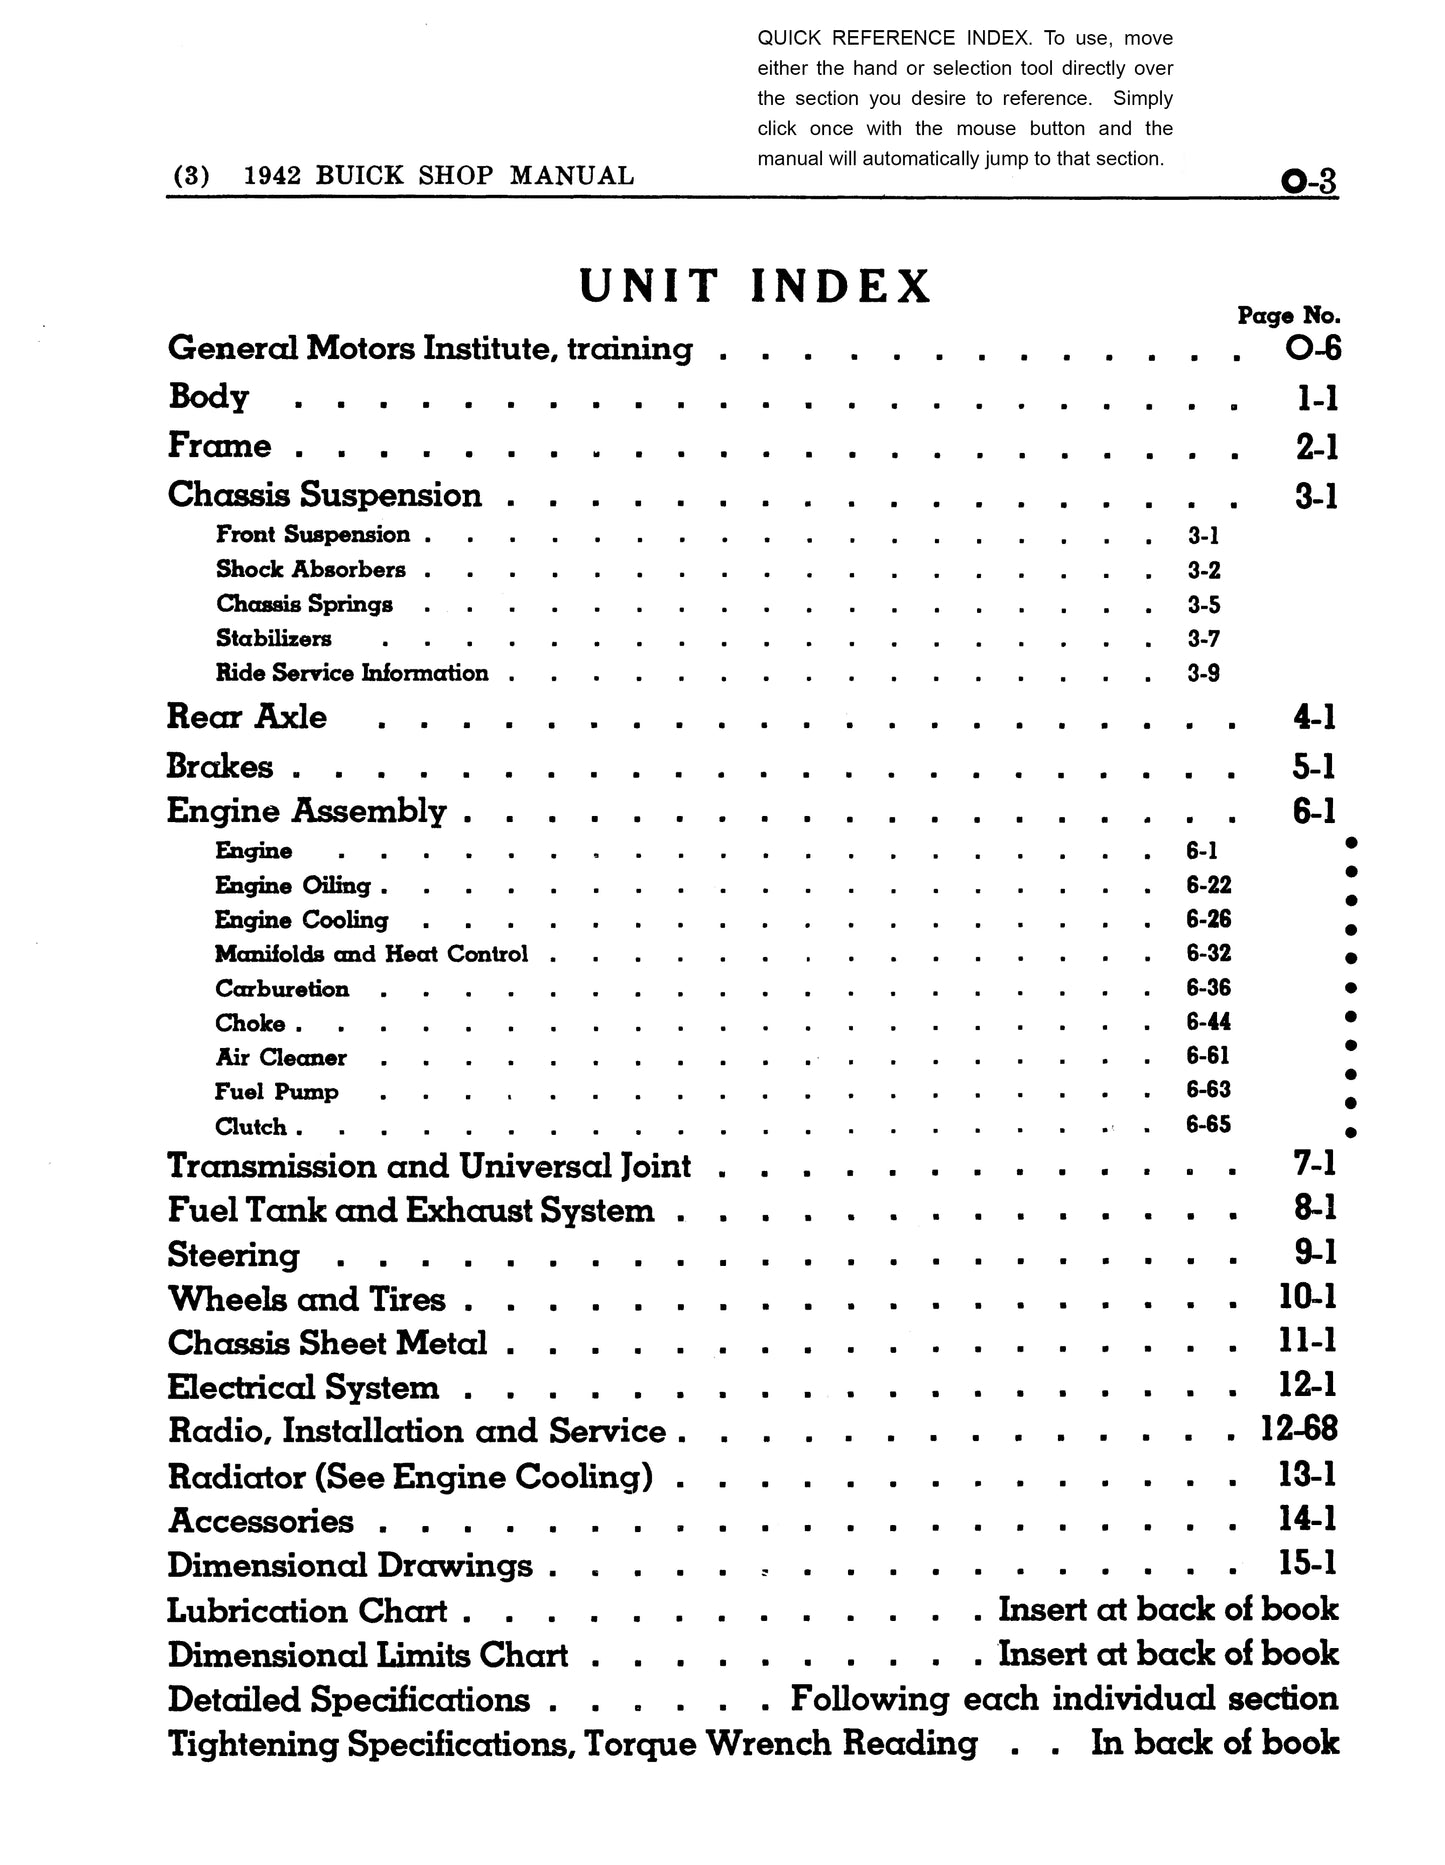 1940-1941 Buick Repair Manuals - All Models